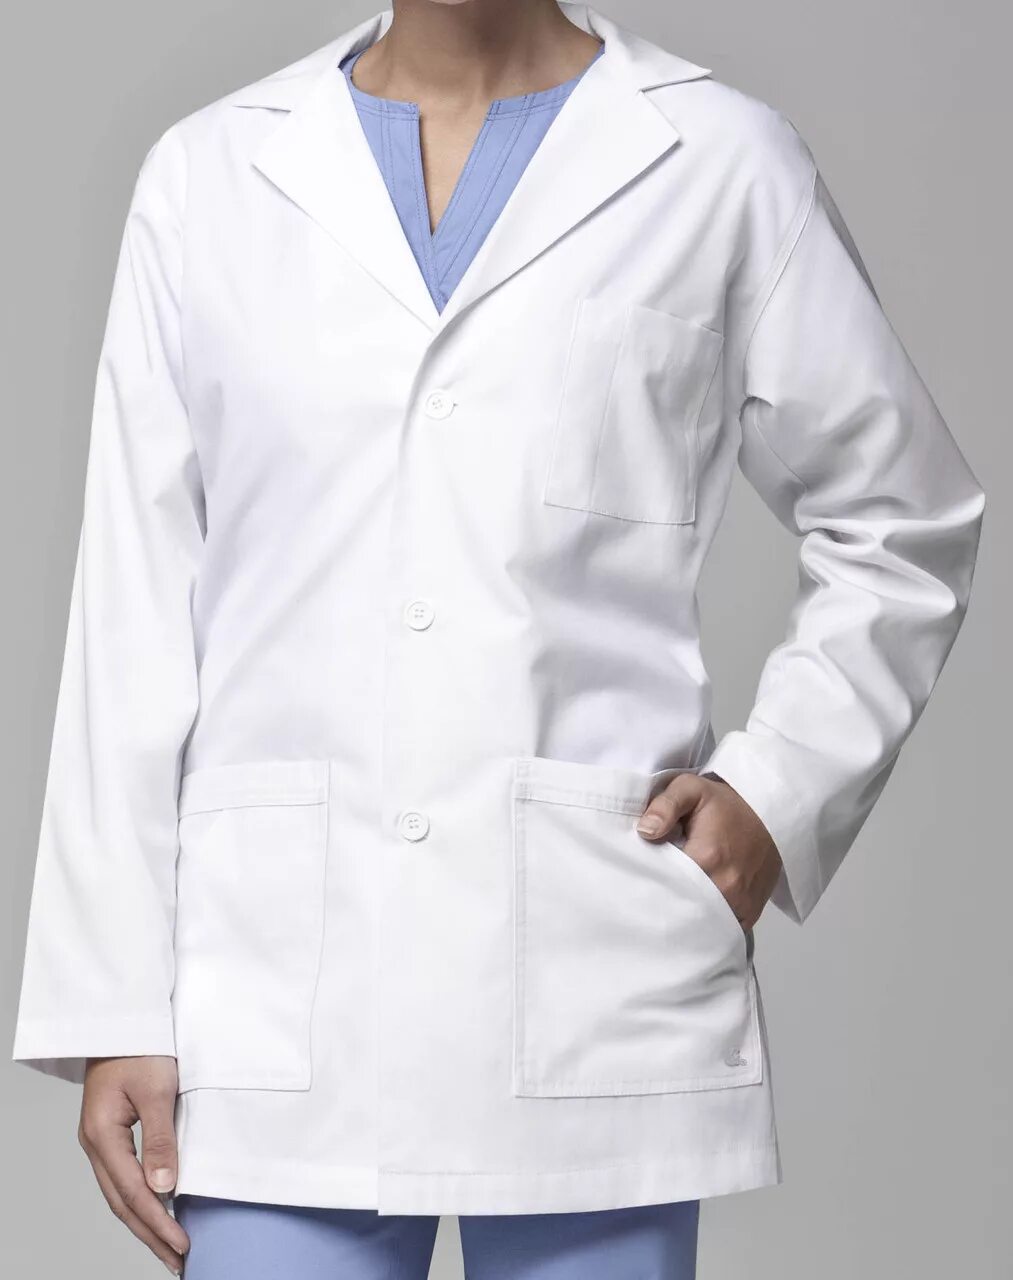 Медицинский халат. Халат медицина. Доктор в халате. Медицинский белый халат мужской для фотошопа.